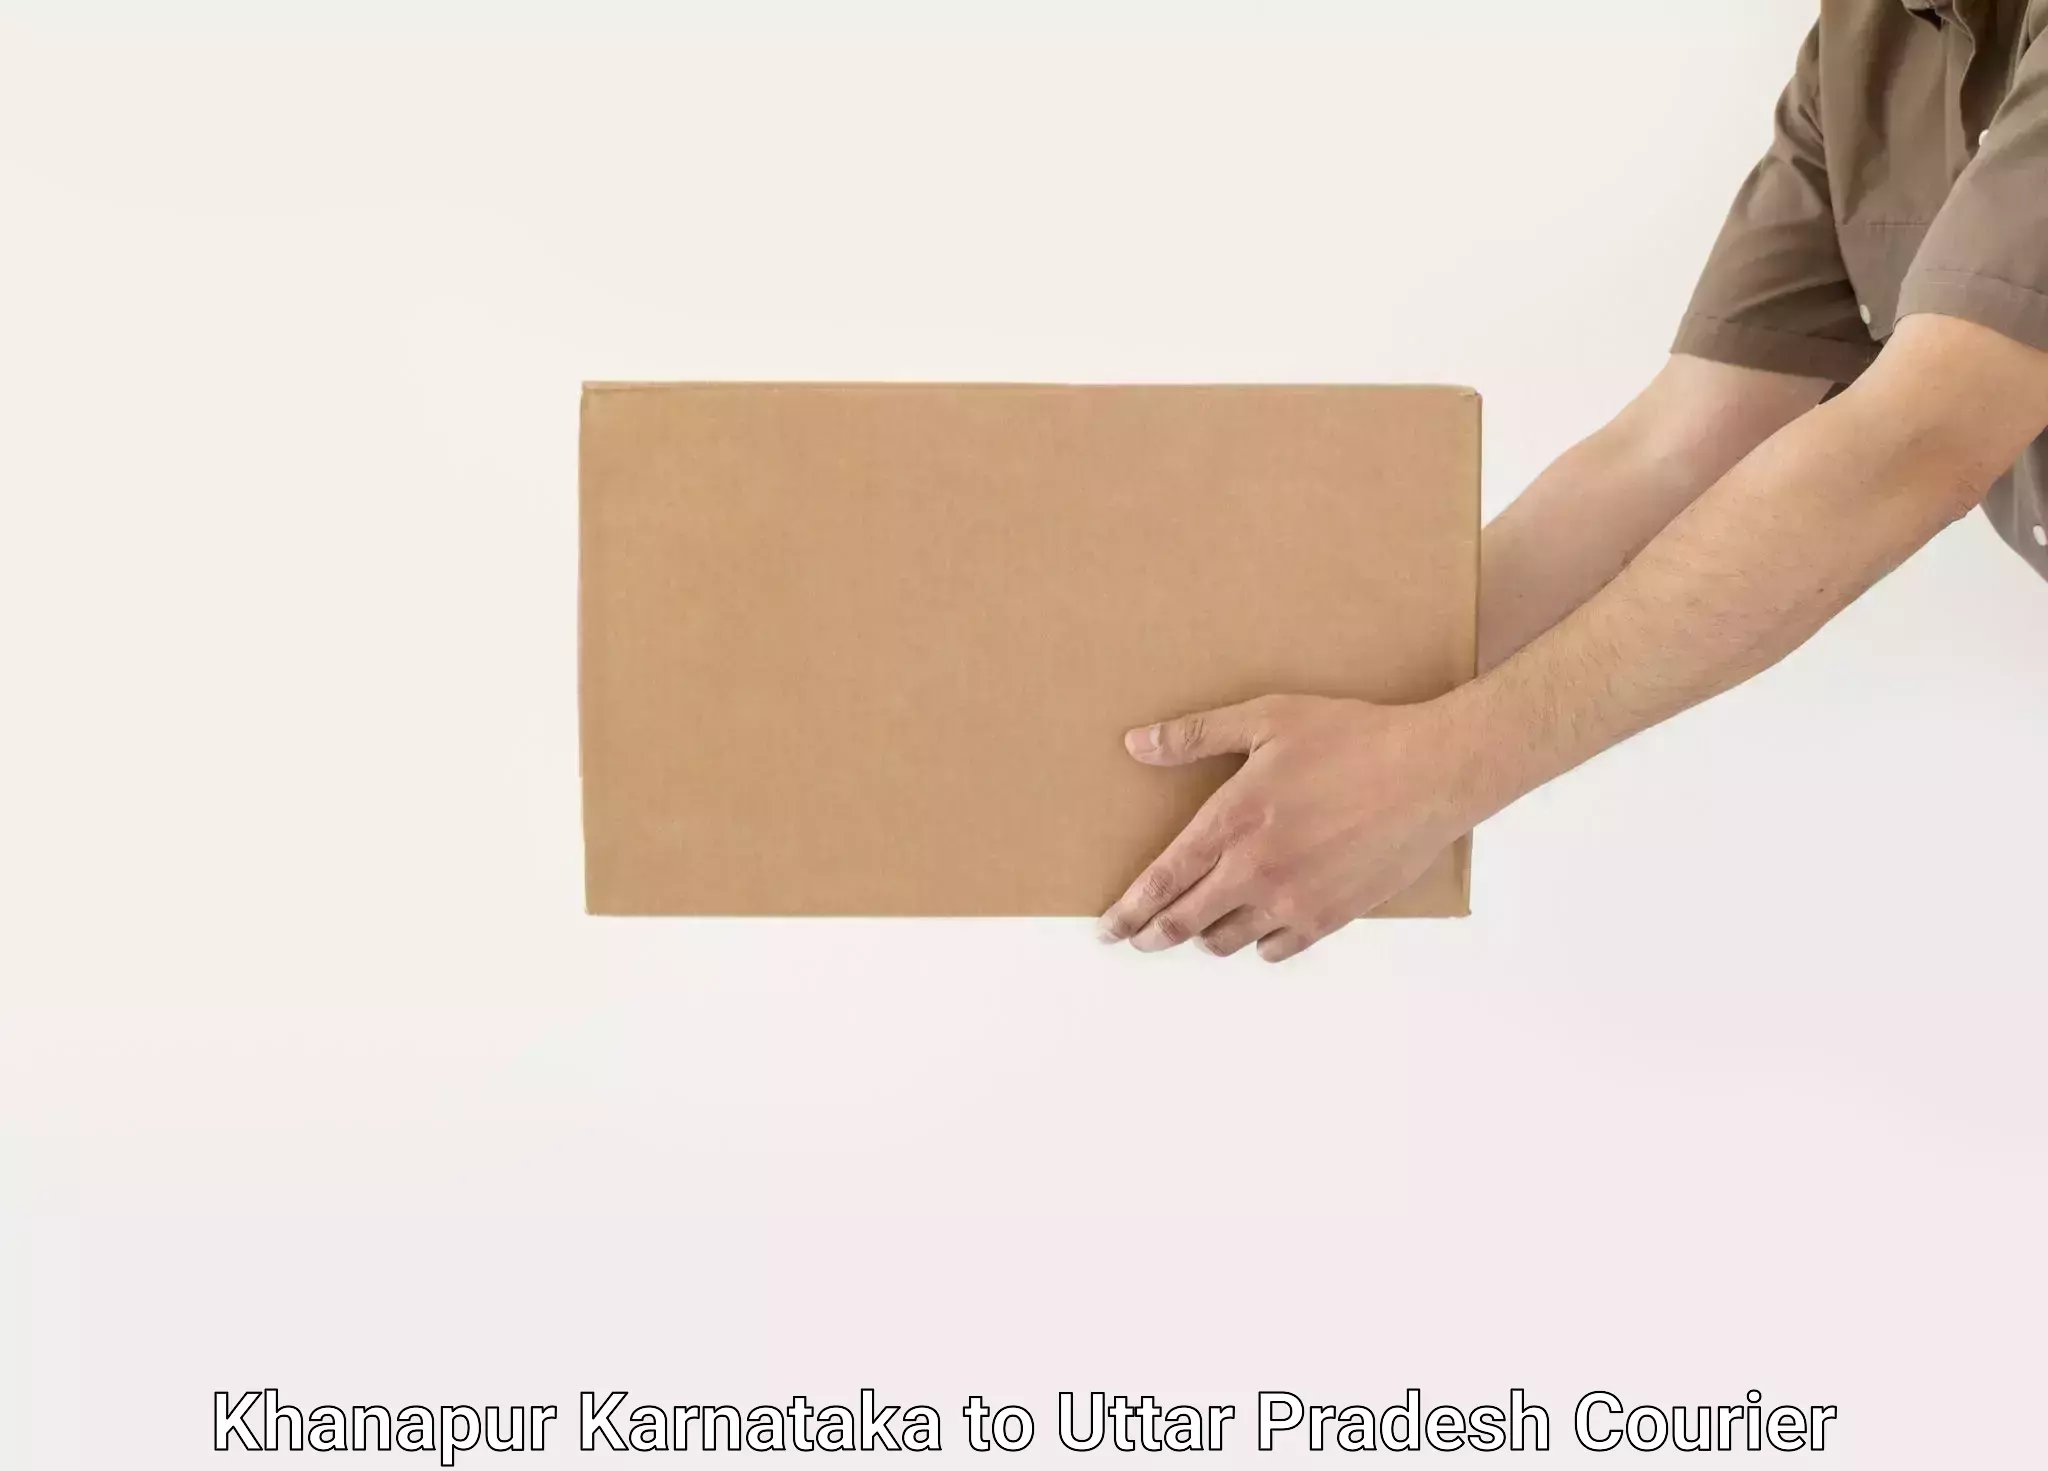 Personalized moving and storage Khanapur Karnataka to Kerakat